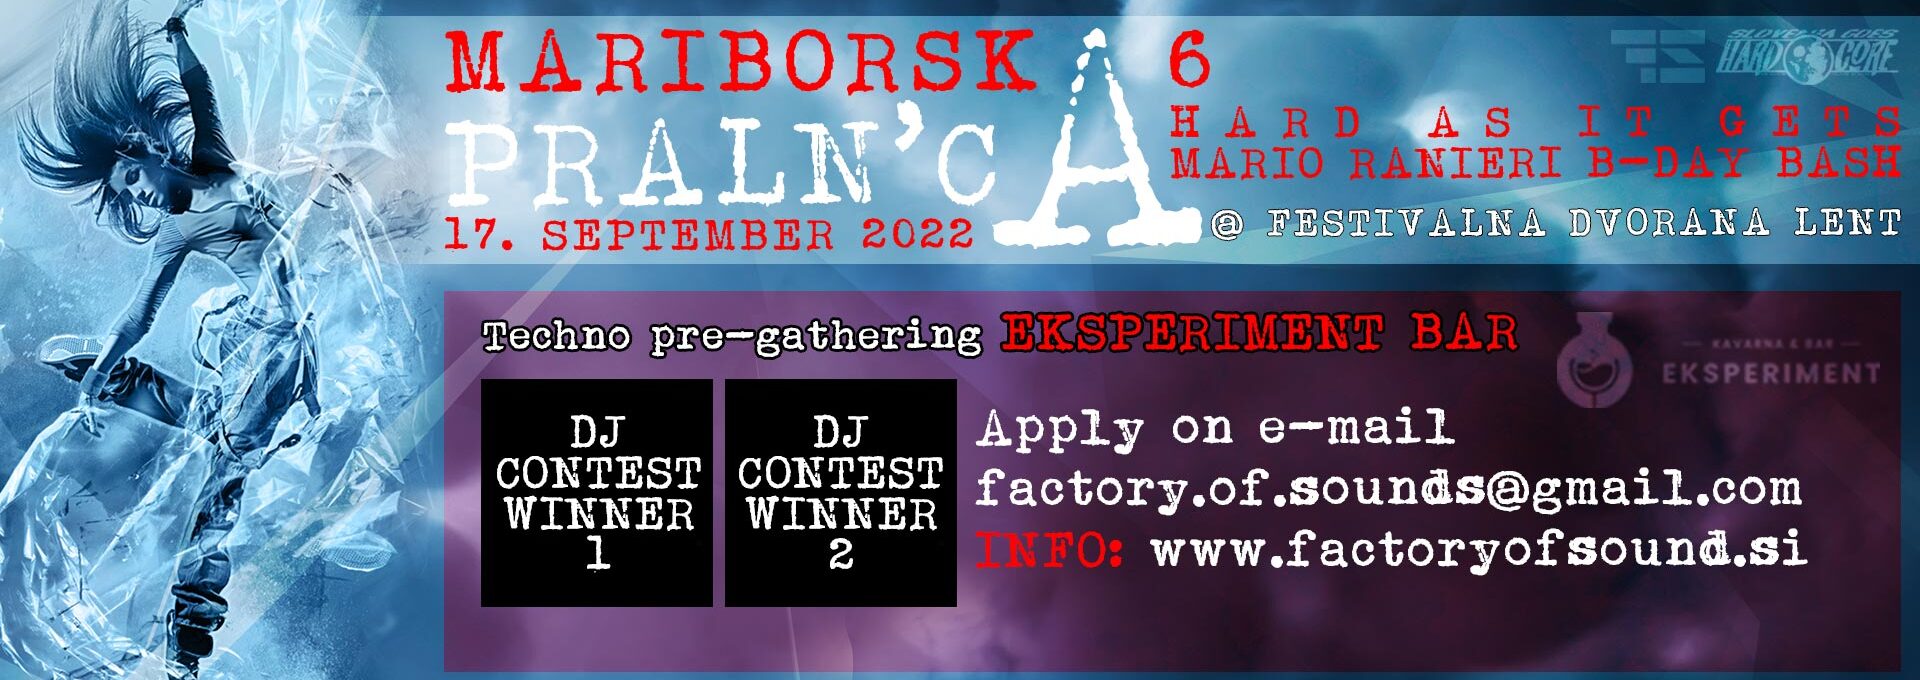 MARIBORSKA PRALN’CA 6 : PRE-GATHERING + DJ CONTEST